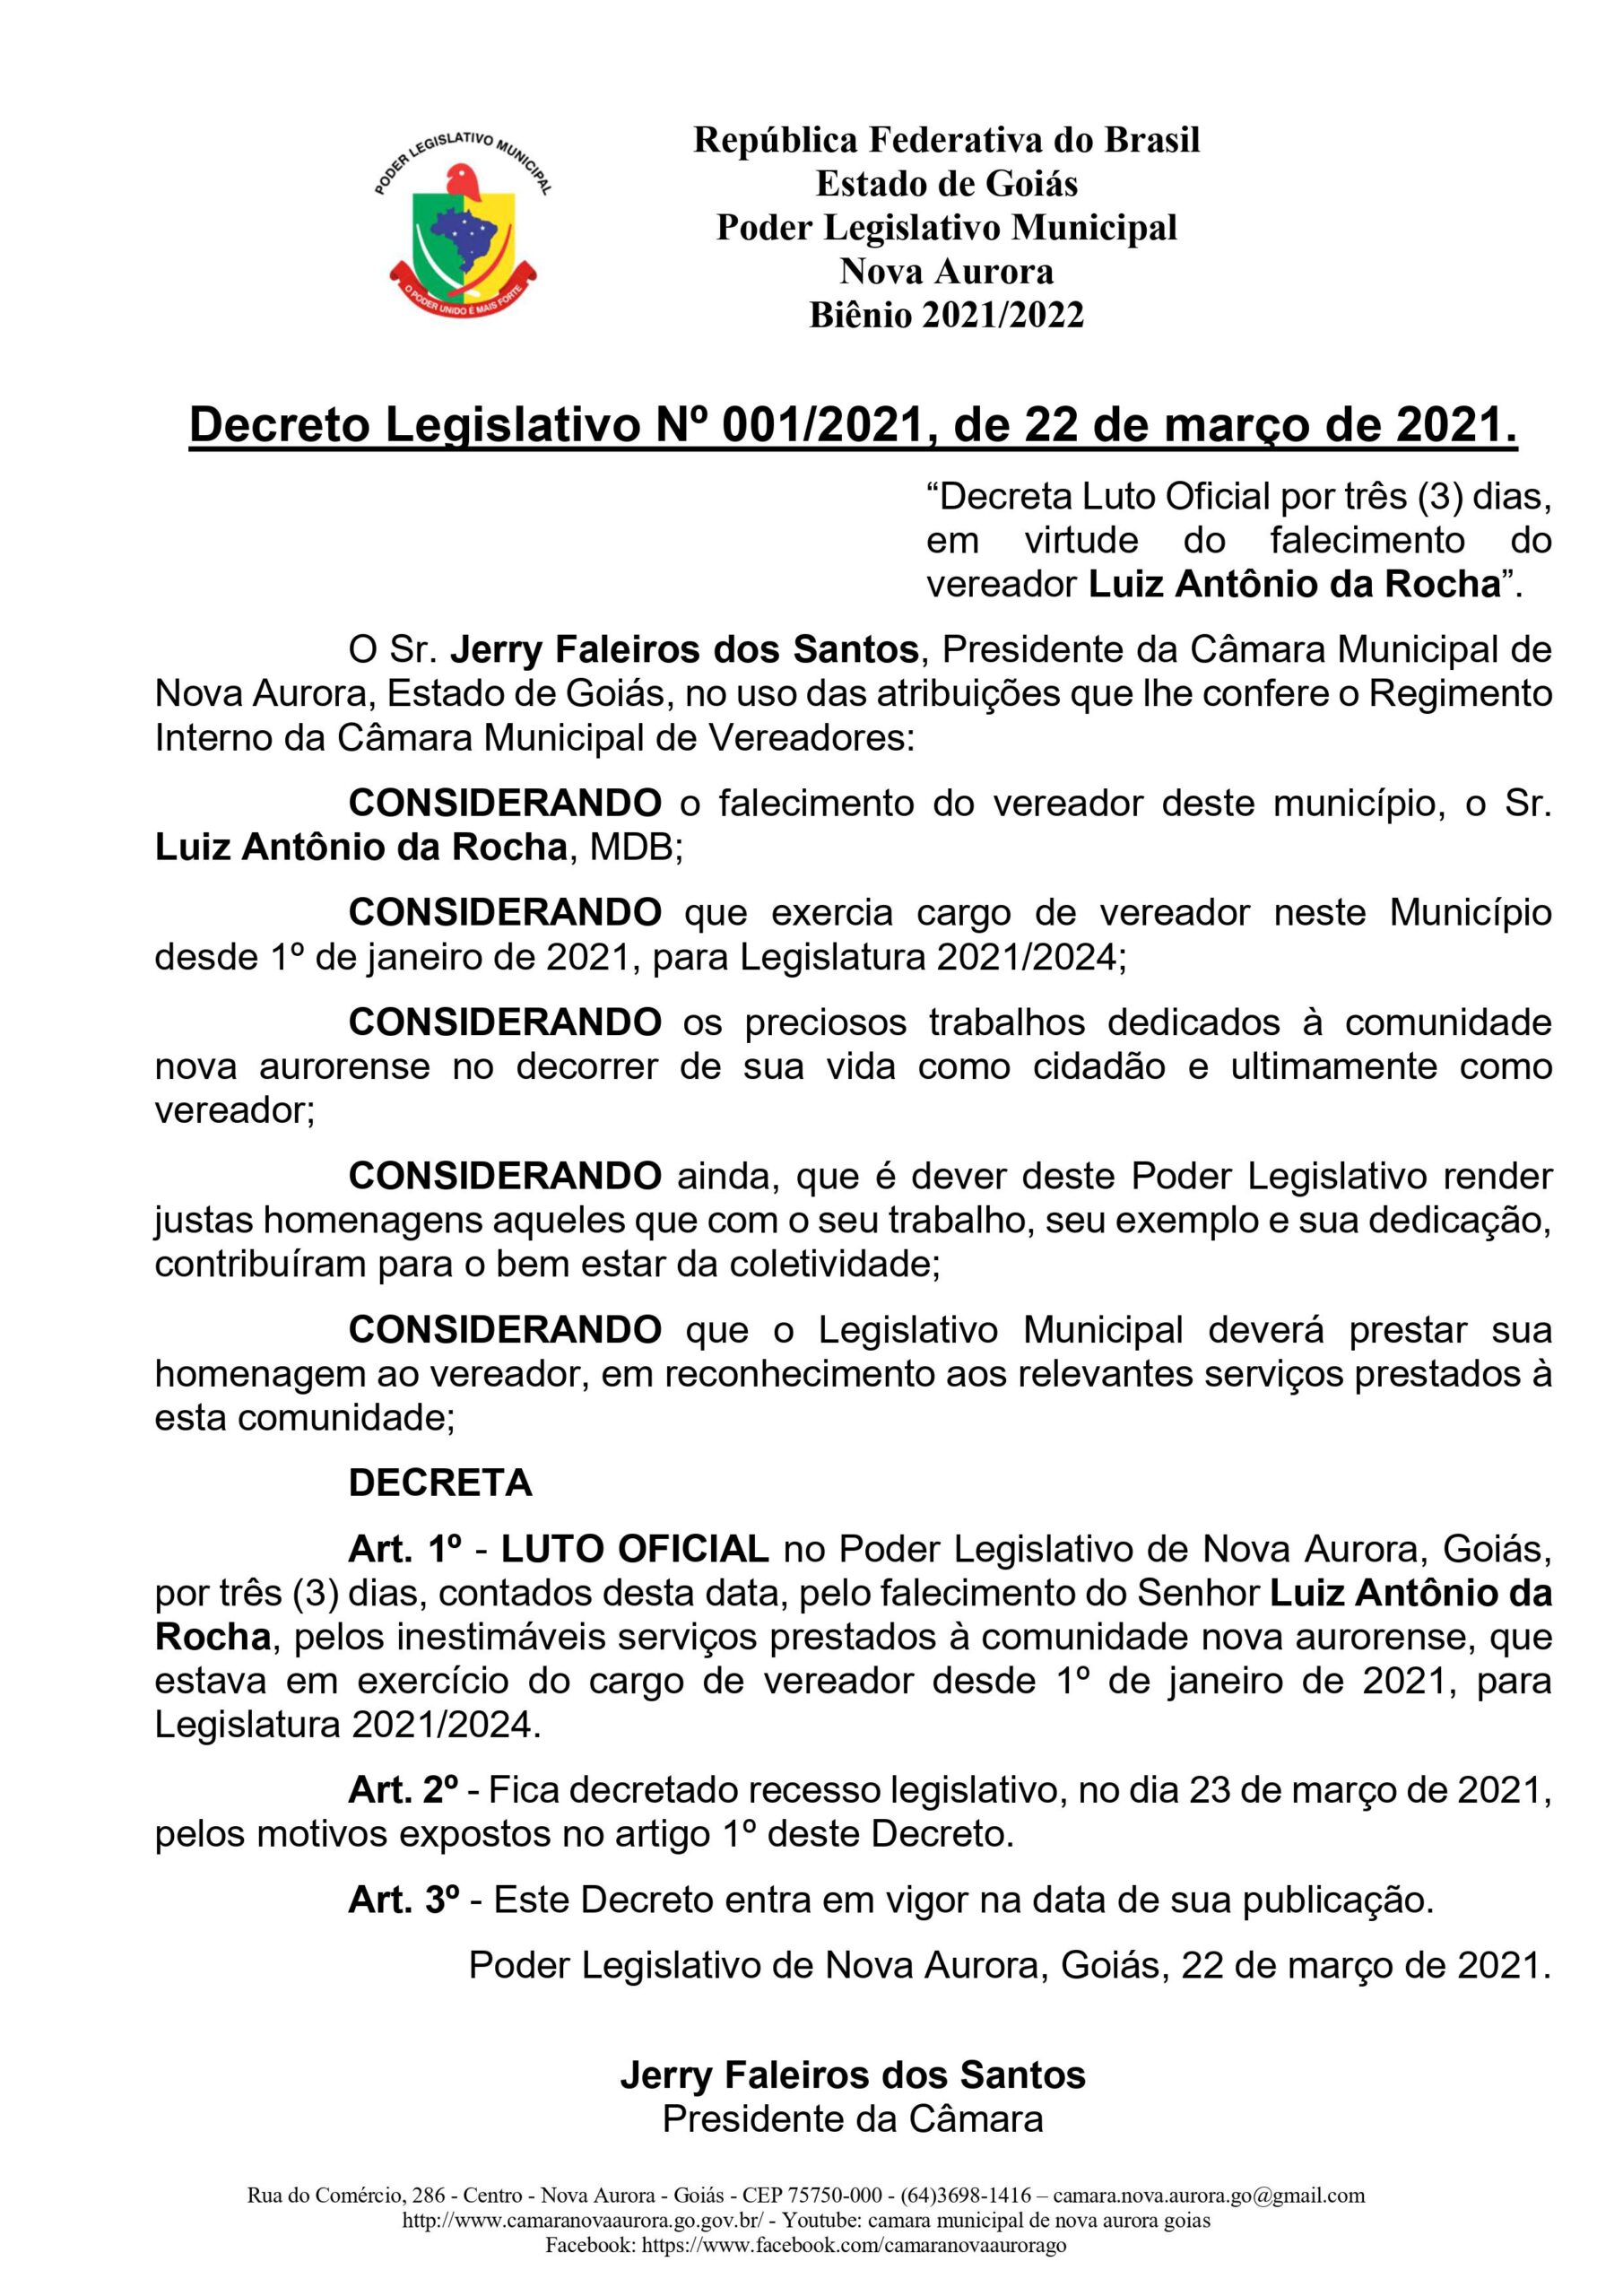 You are currently viewing Decreto Legislativo 001/2021